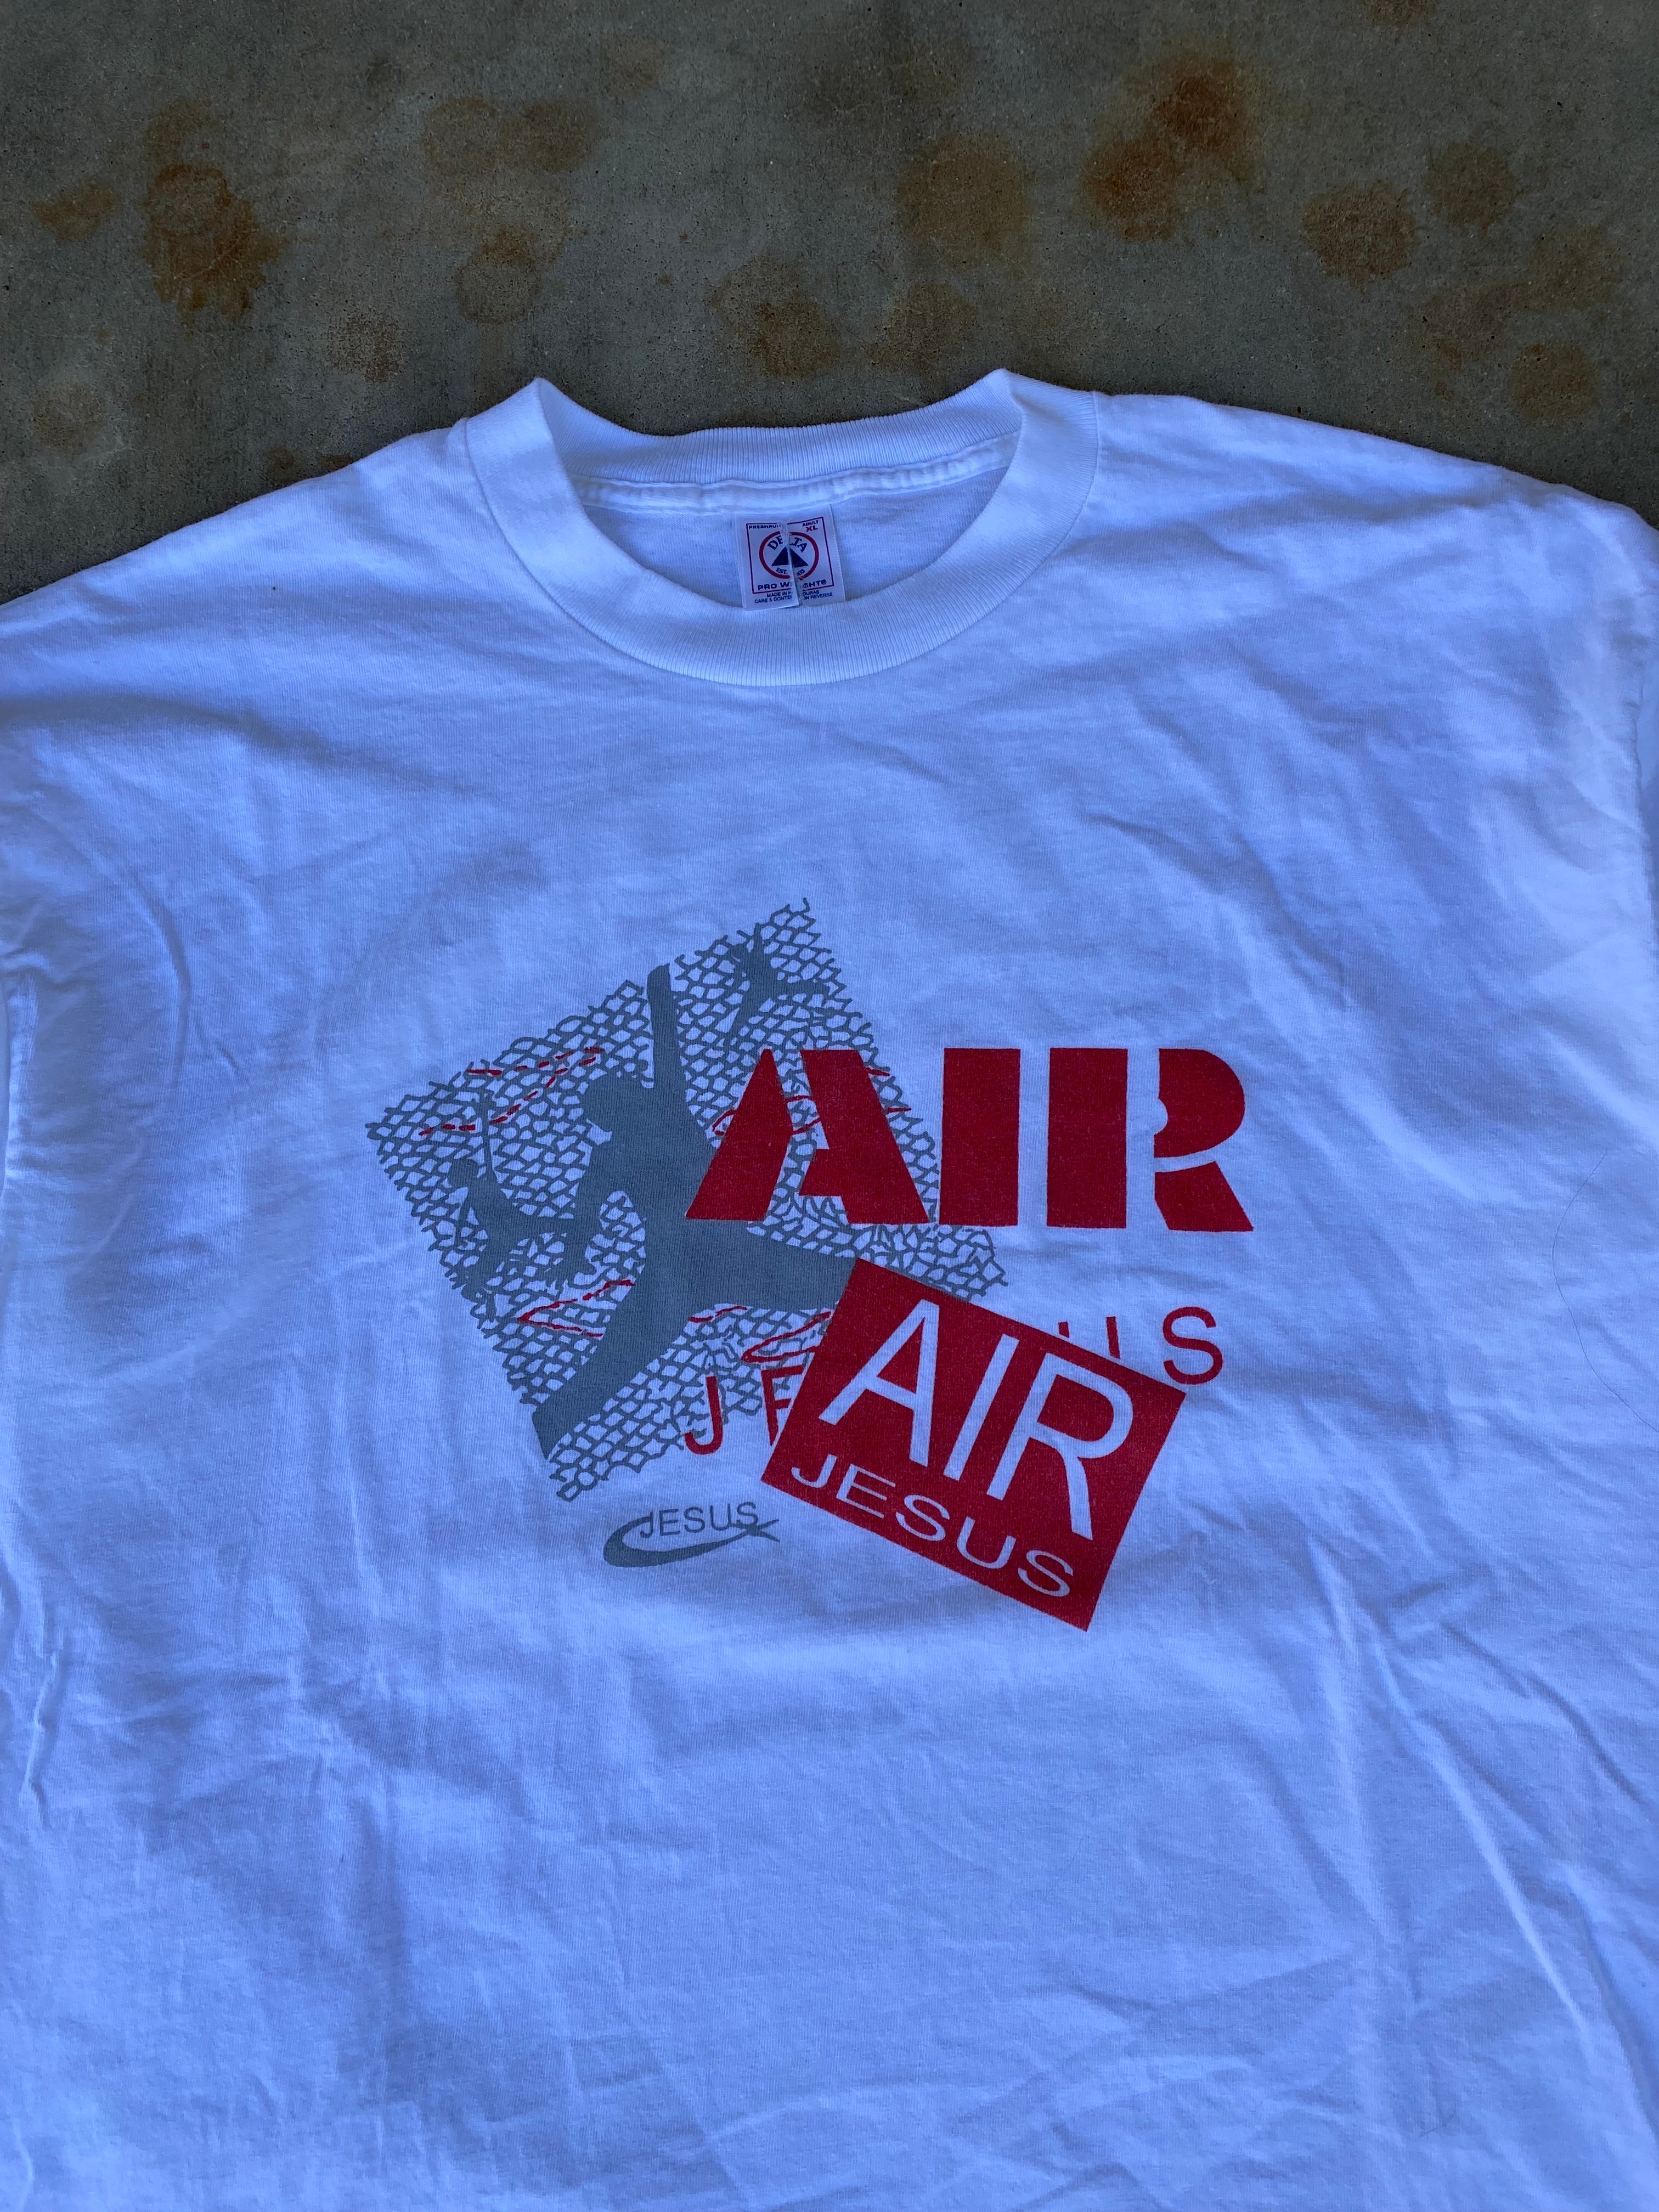 1990s Air Jesus T-Shirt (XL)